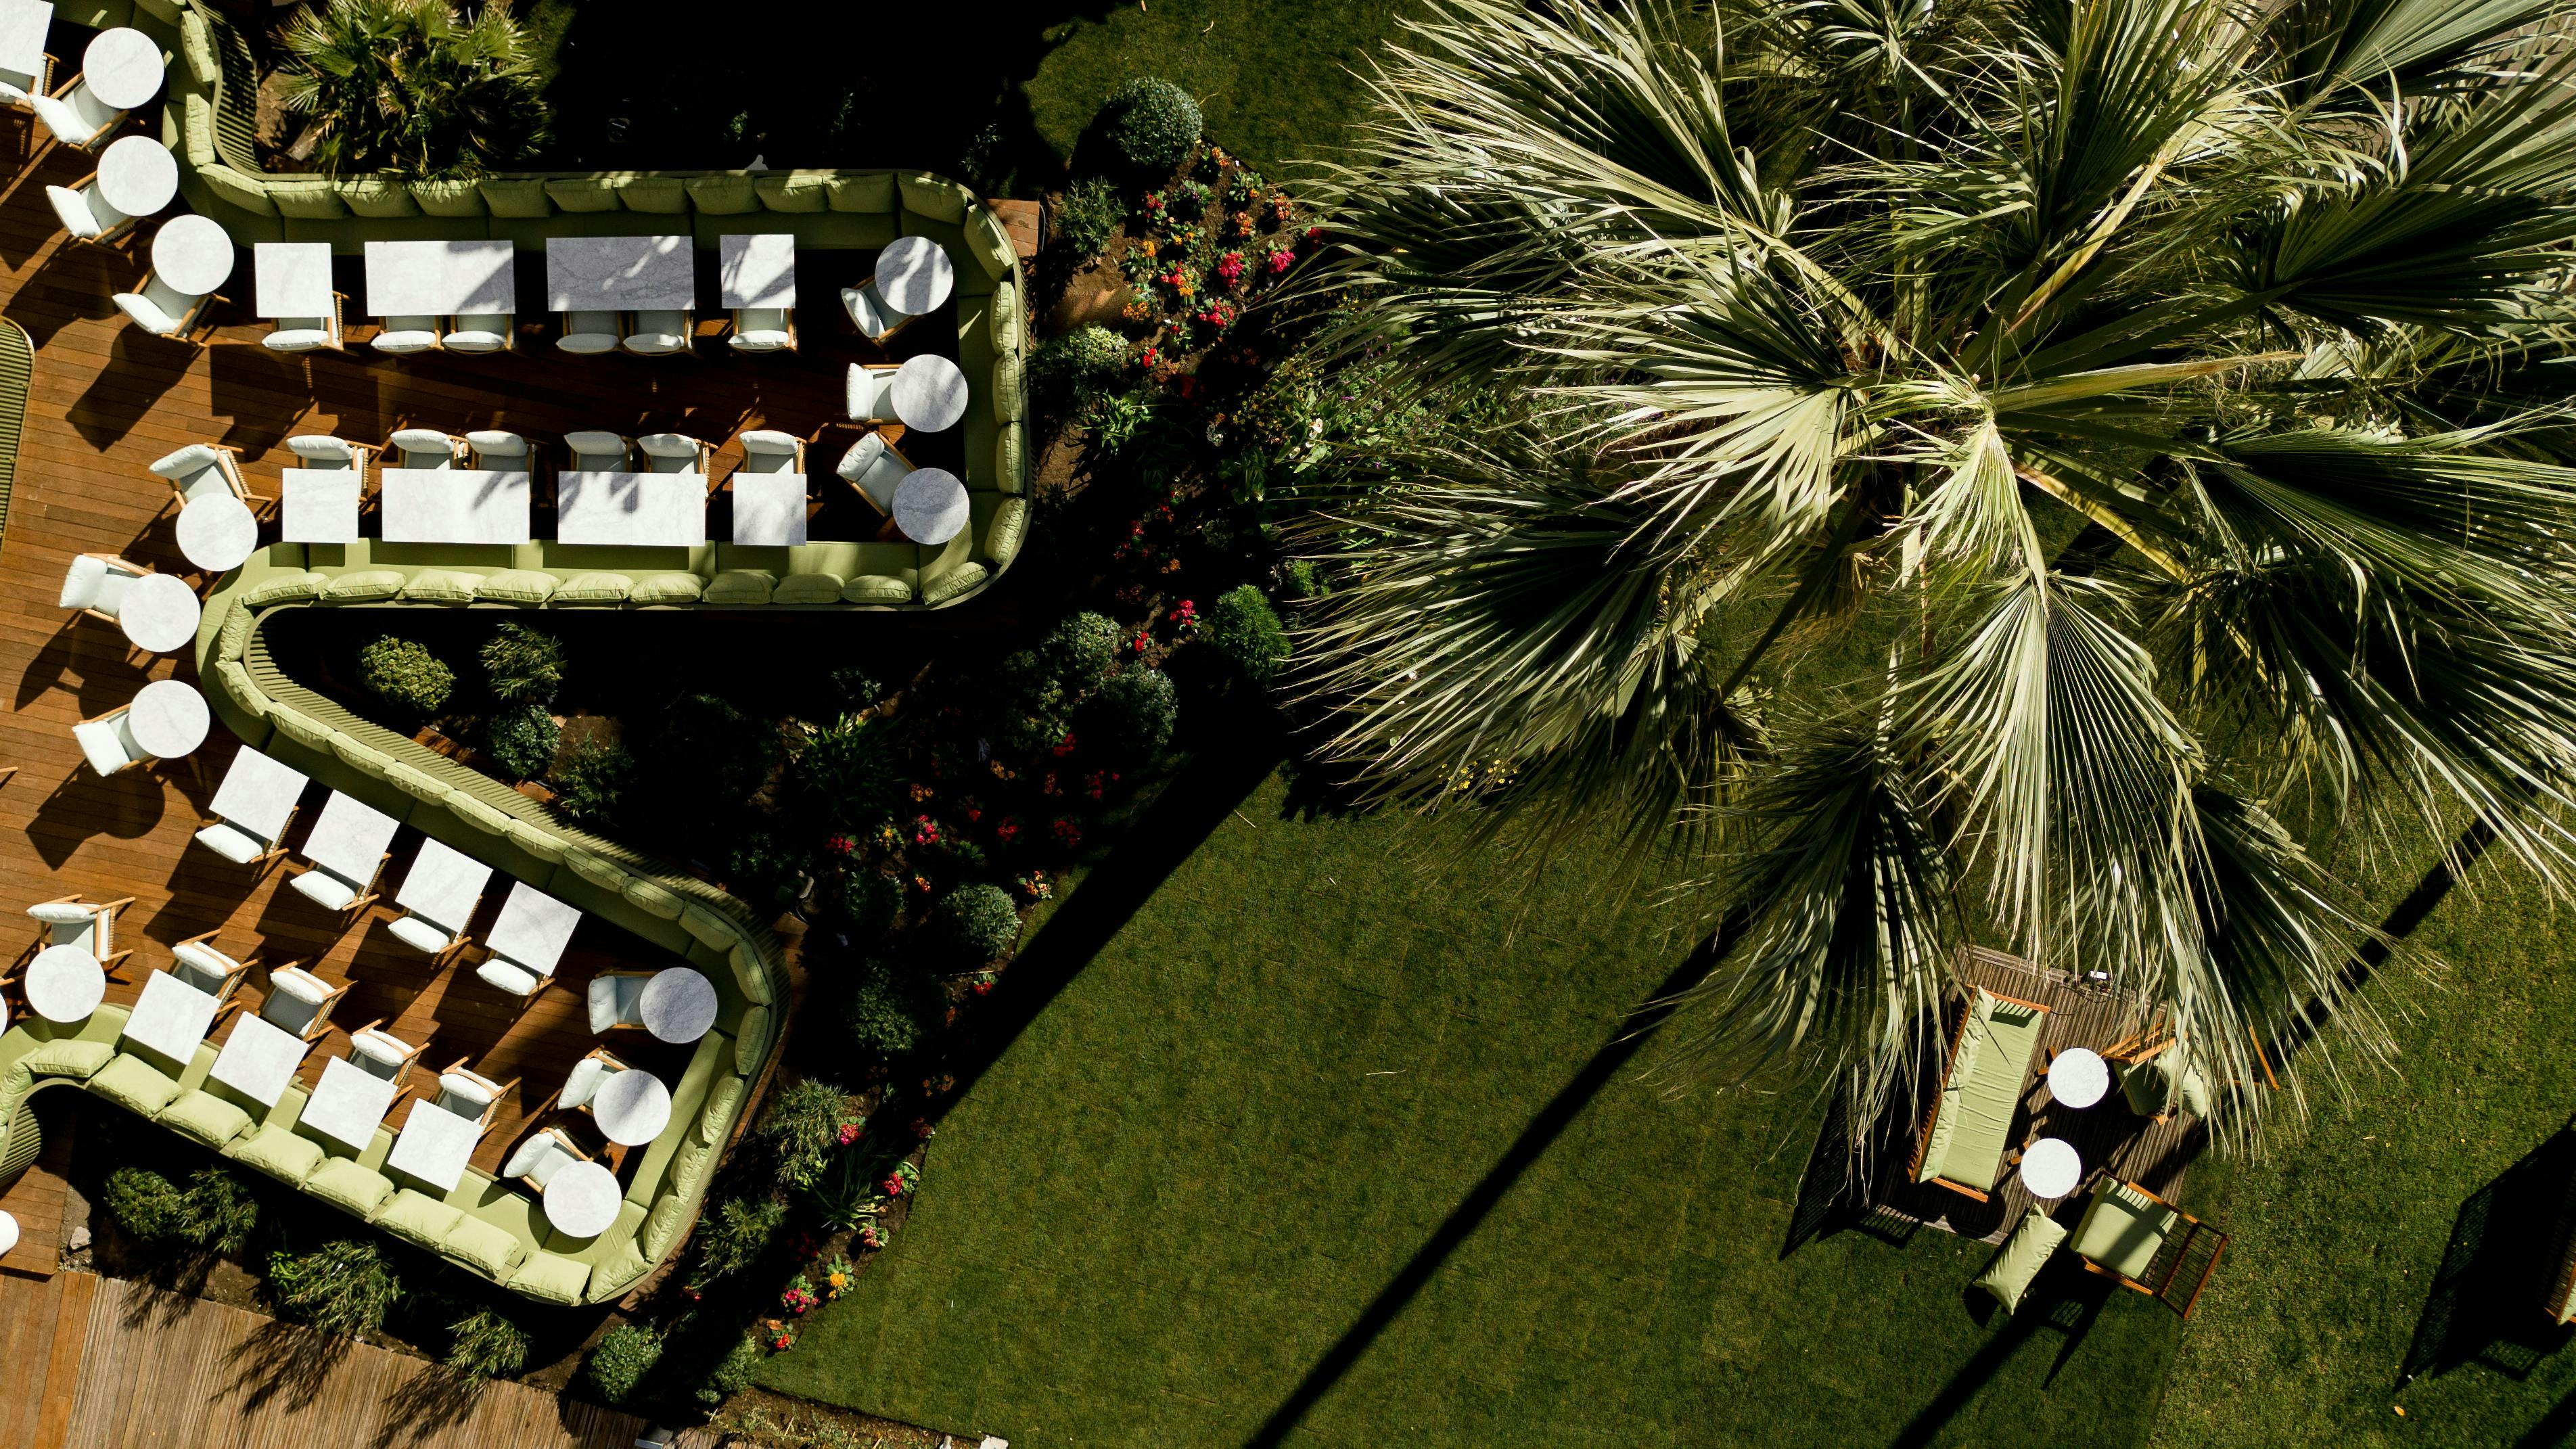 cannes alpes-maritimes garden nature outdoors grass plant hotel resort tree patio vegetation